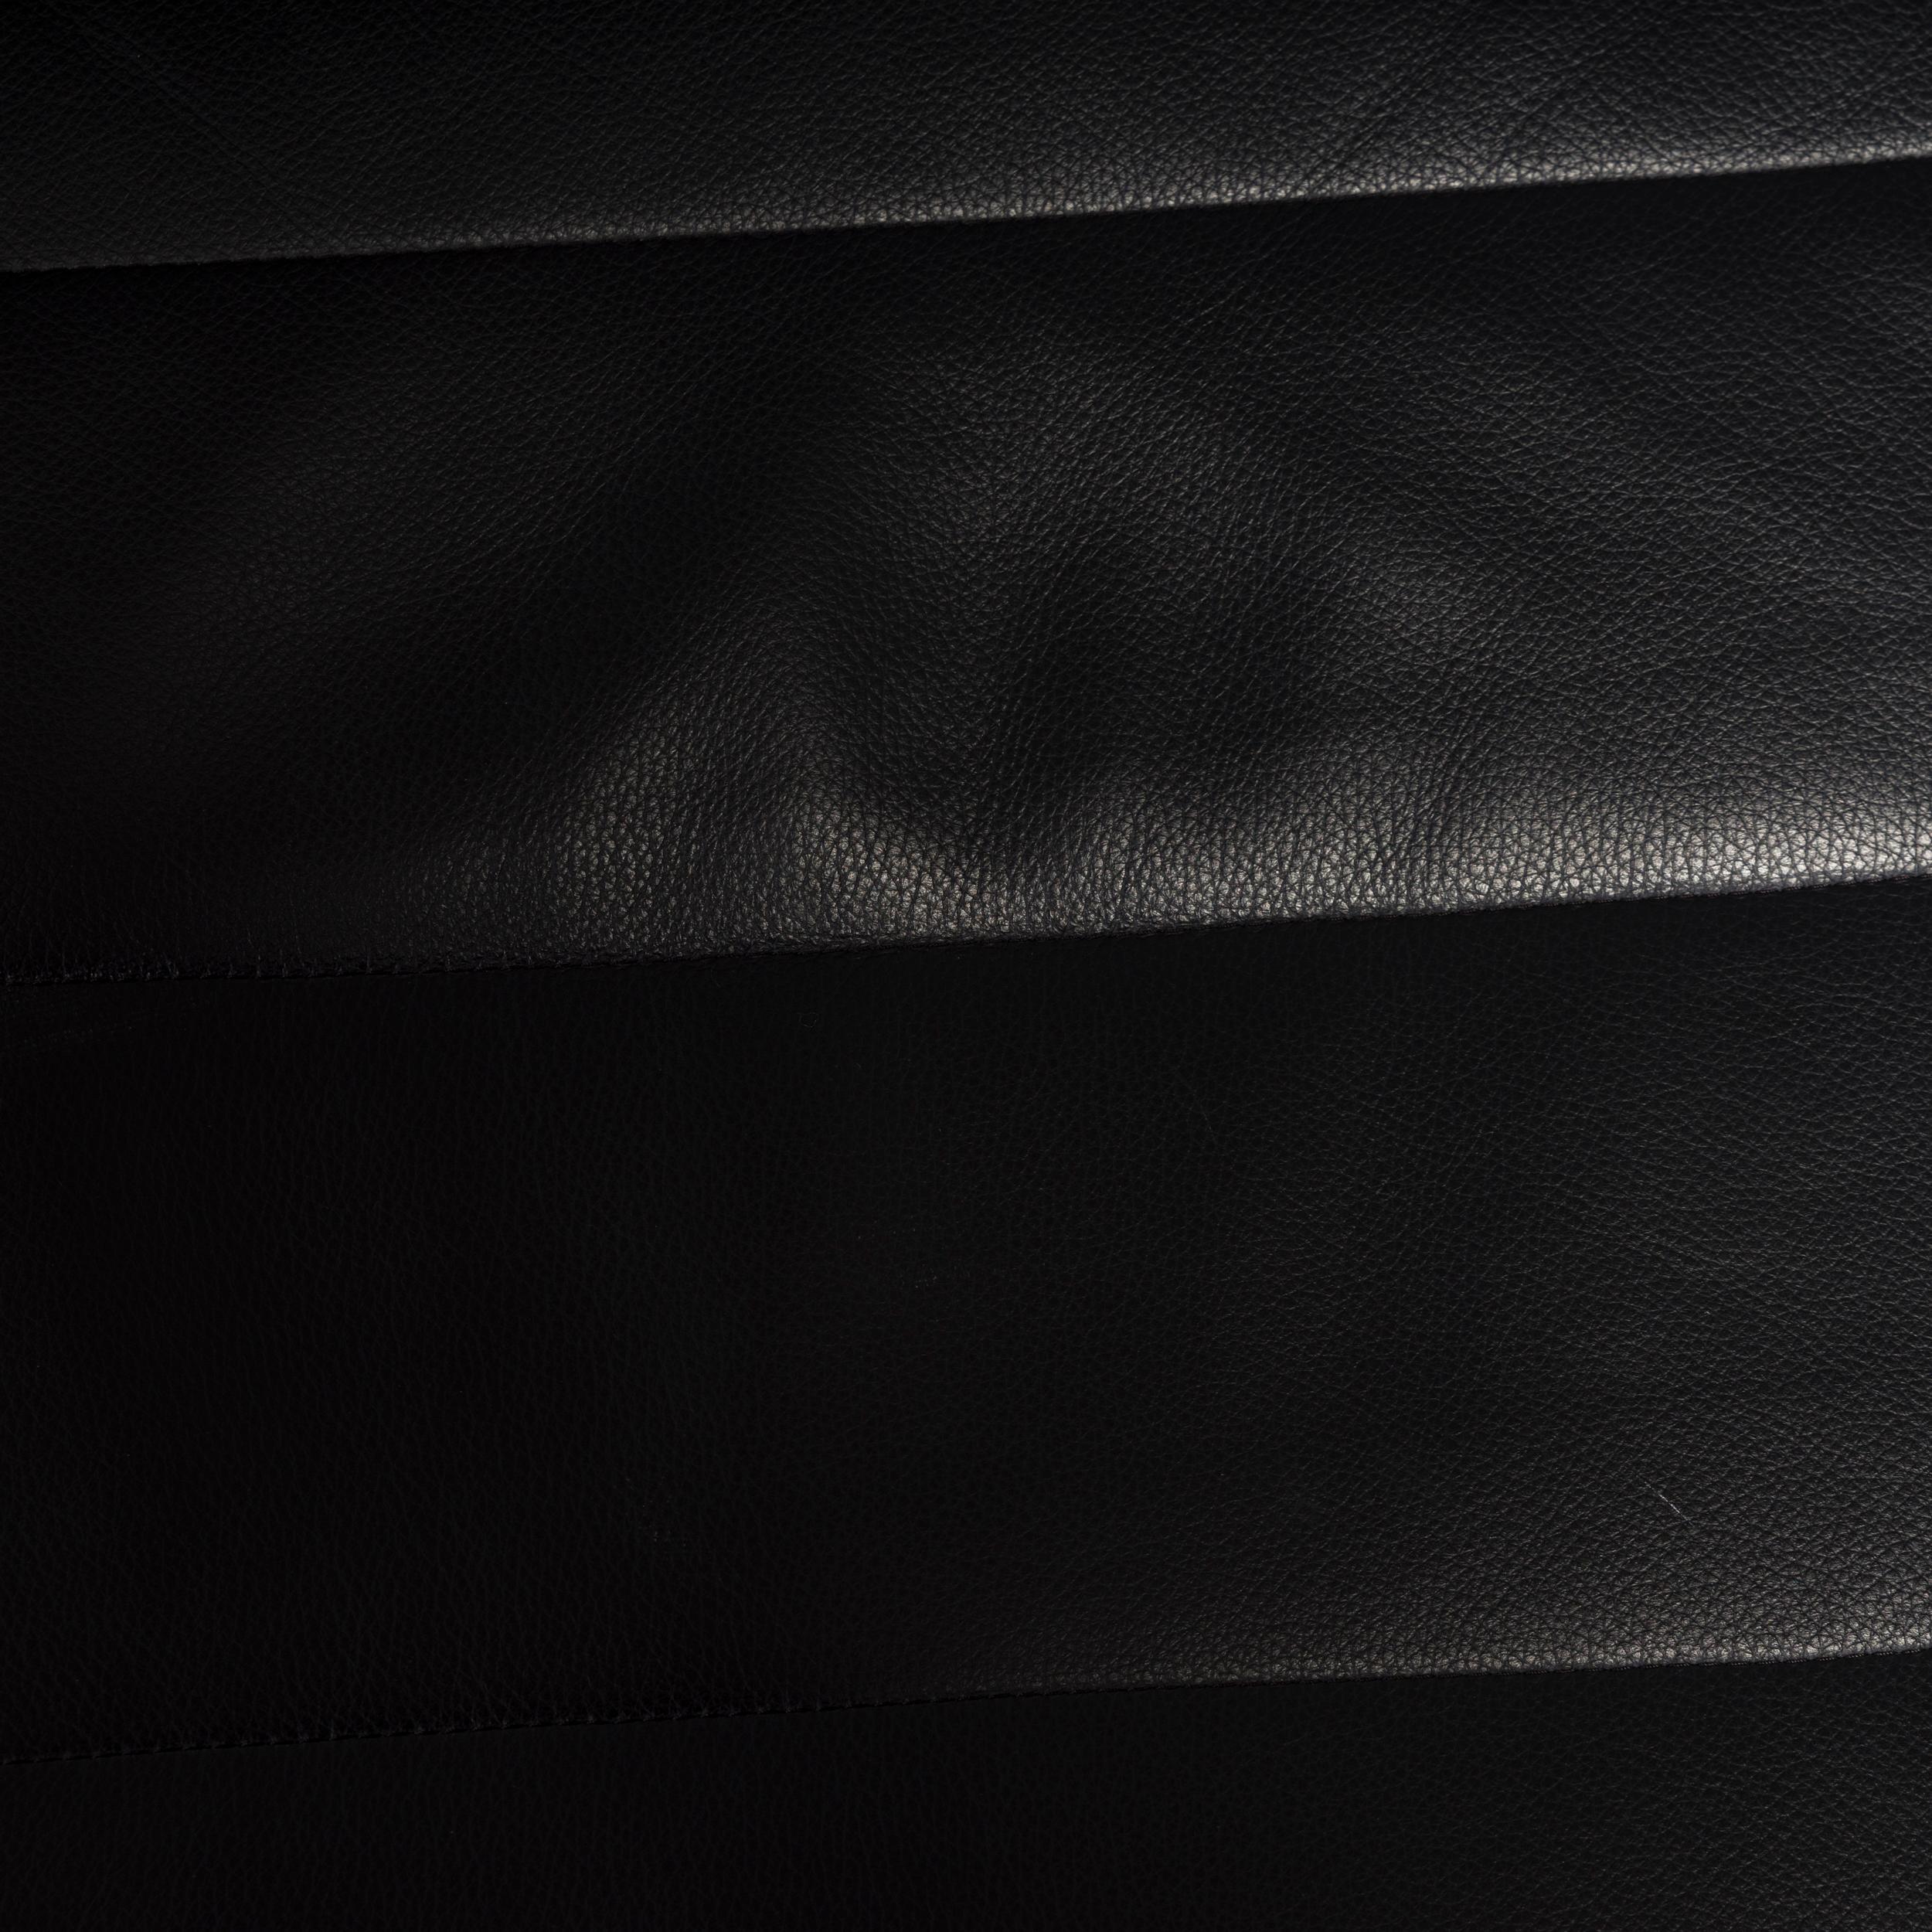 Rodolfo Dordoni for Minotti Black Leather Delaunay Lounge Chair, Set of 2 2